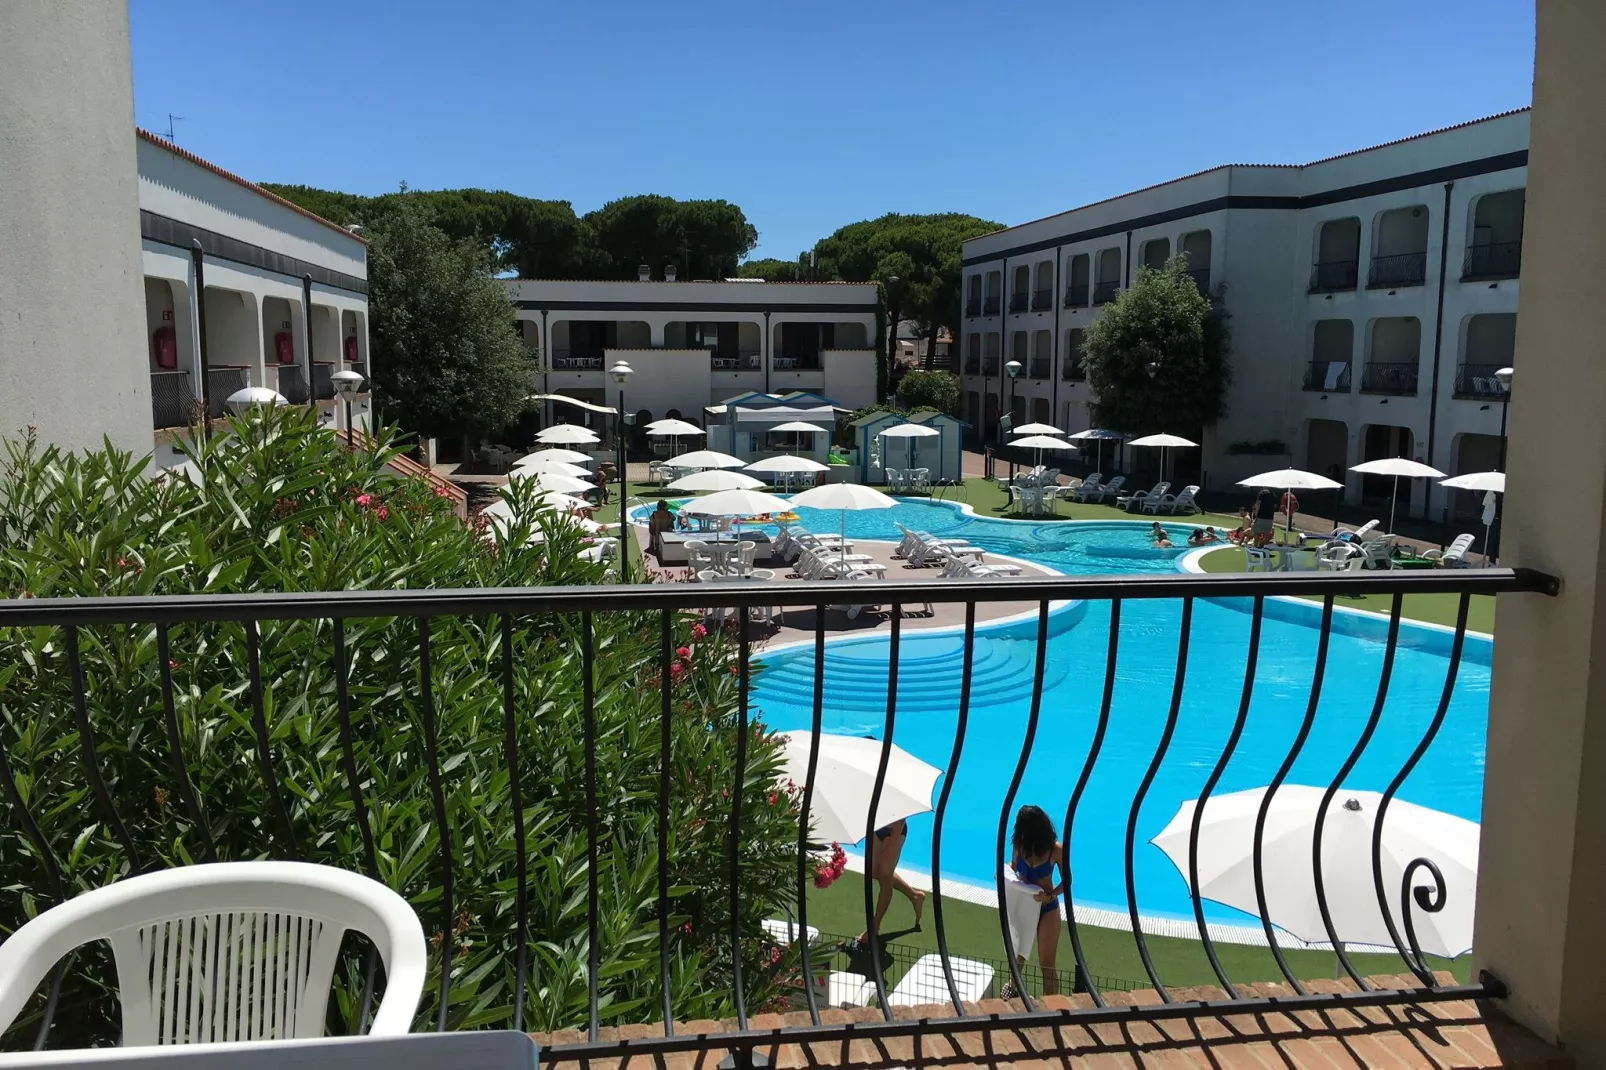 Michelangelo Hotel & Family Resort - Caliente Cinque-Terrasbalkon